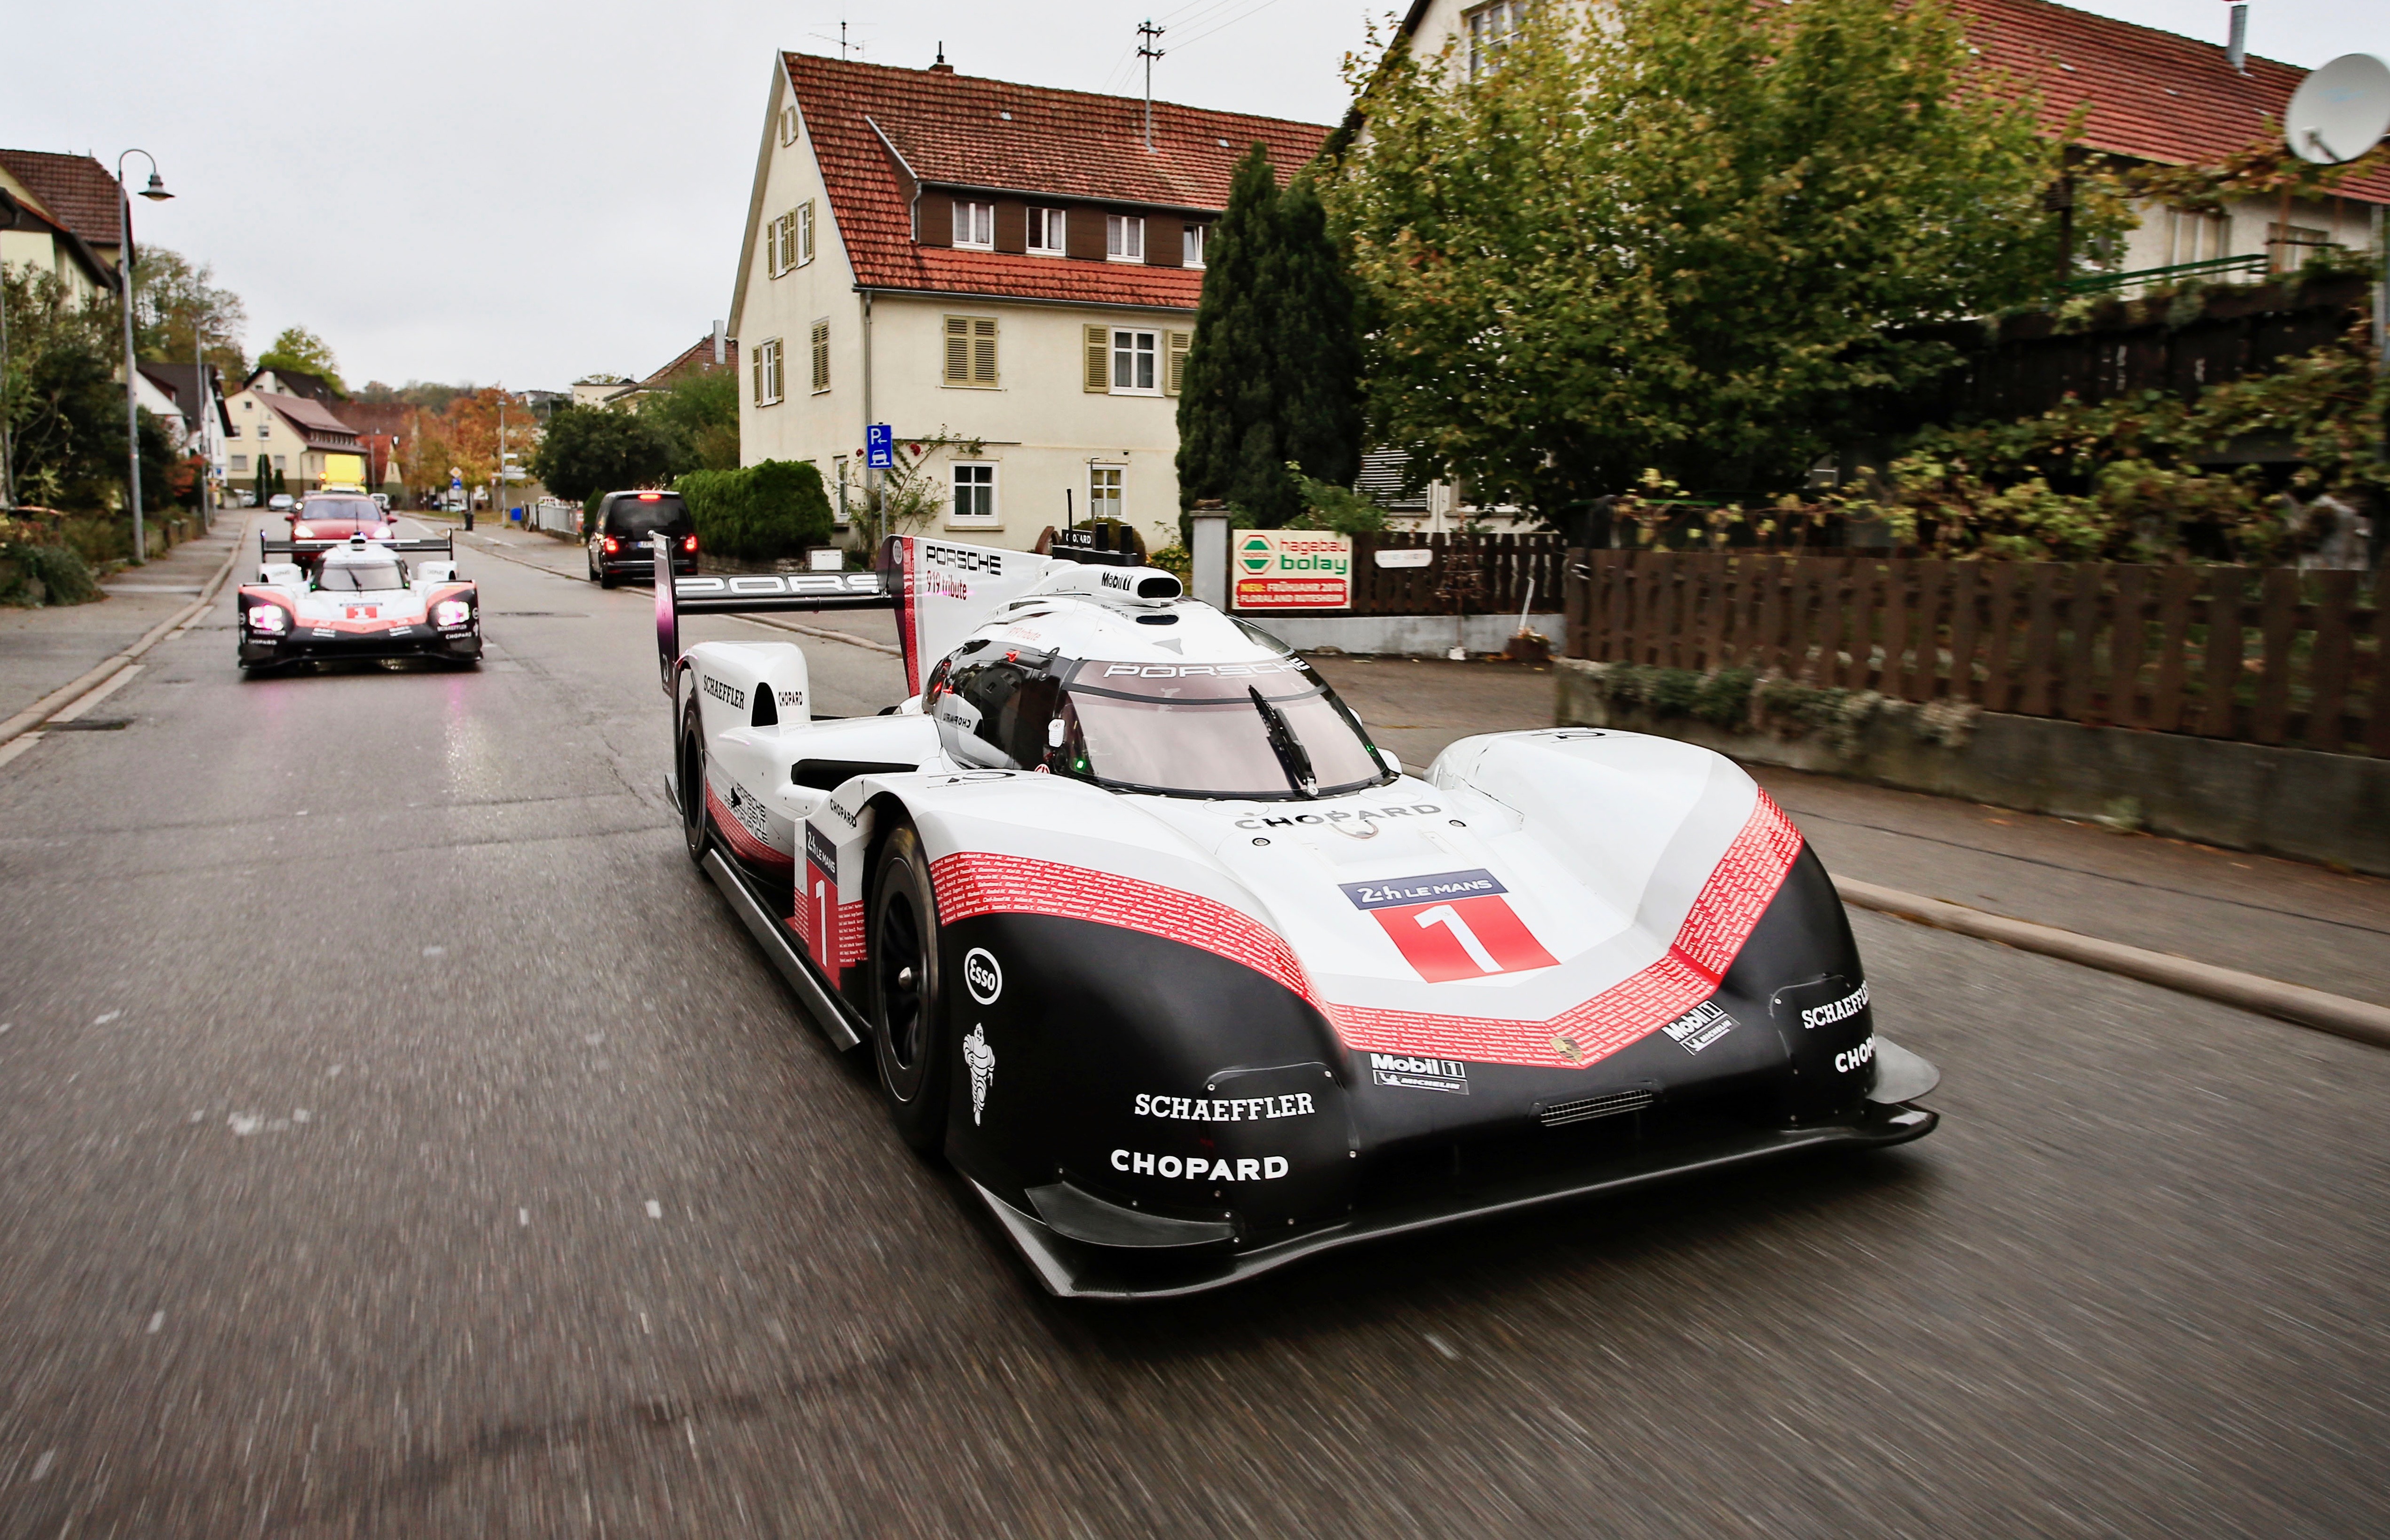 Le Mans-winning Porsches racing cars driven on public roads